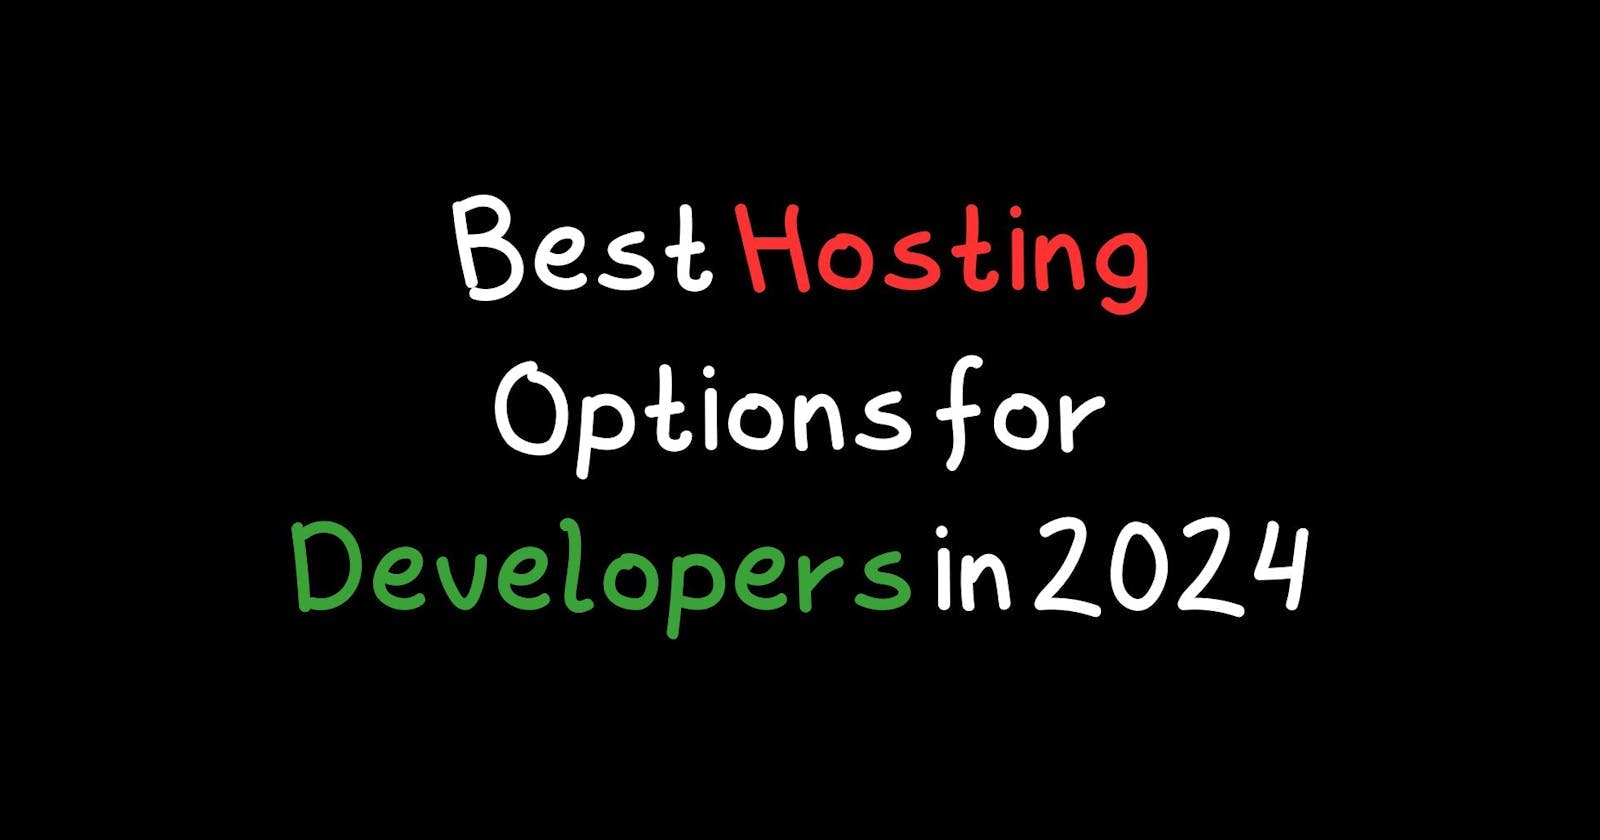 Best Hosting Options for Developers in 2024